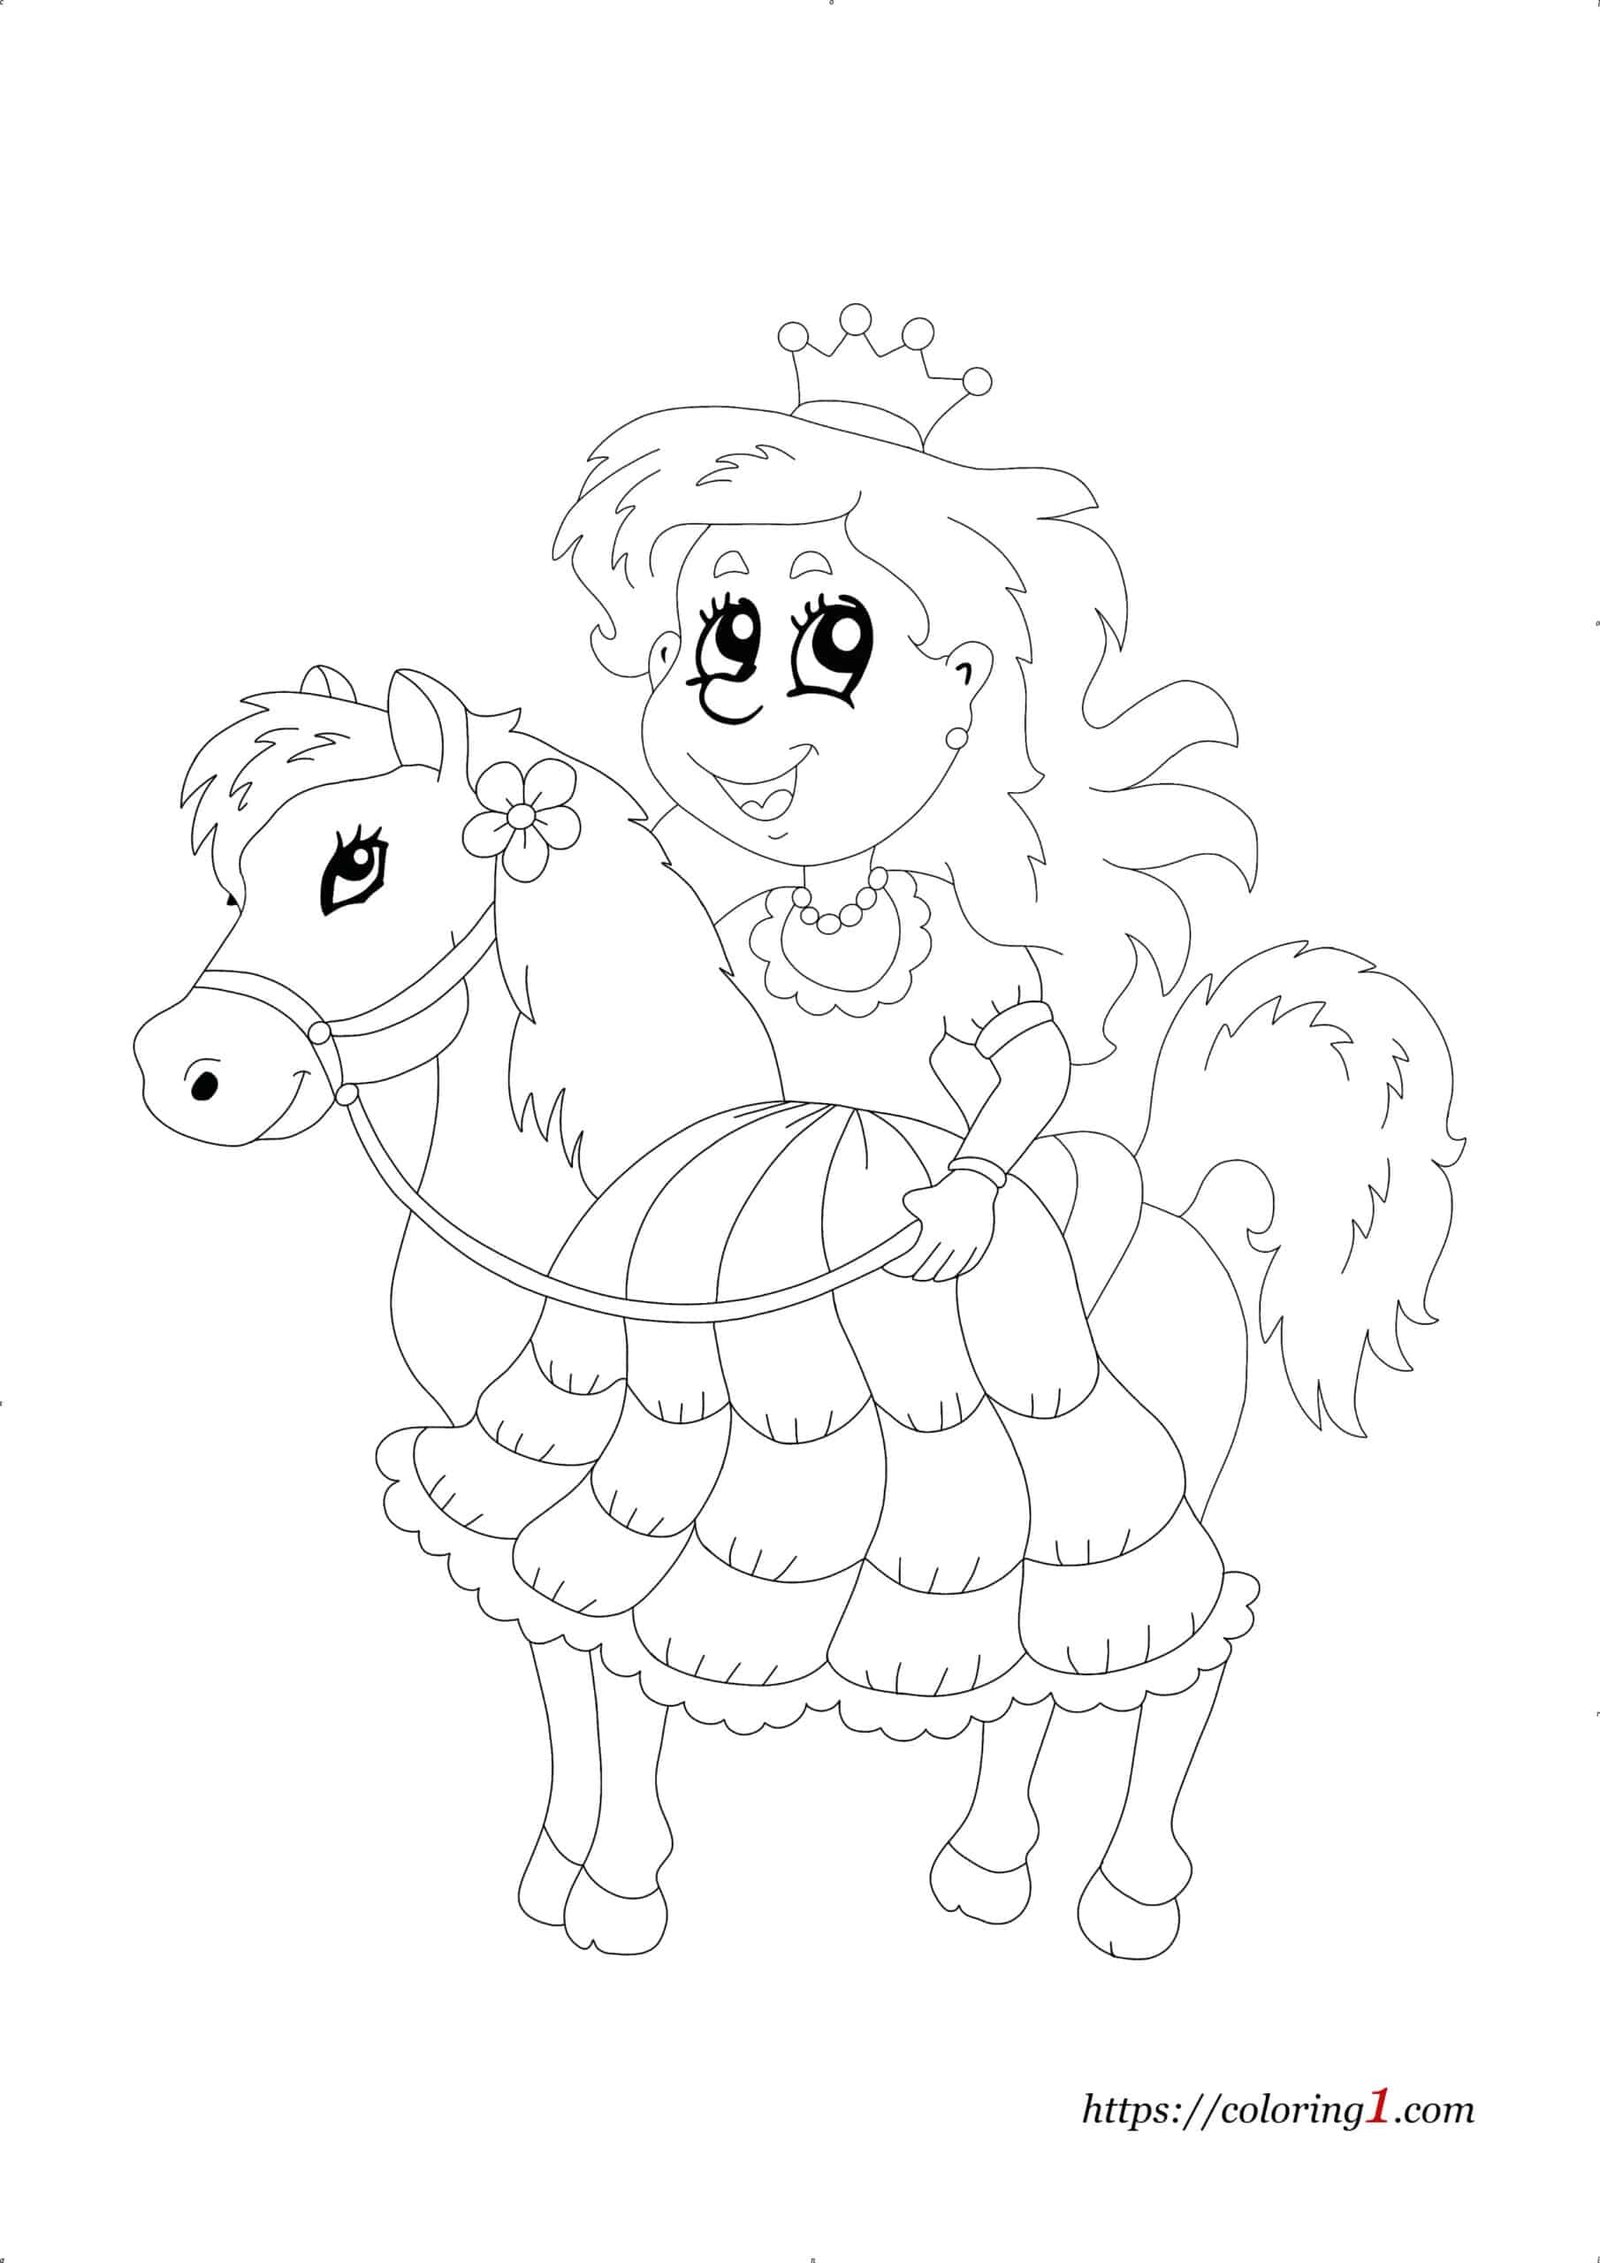 Princess Horse coloring page